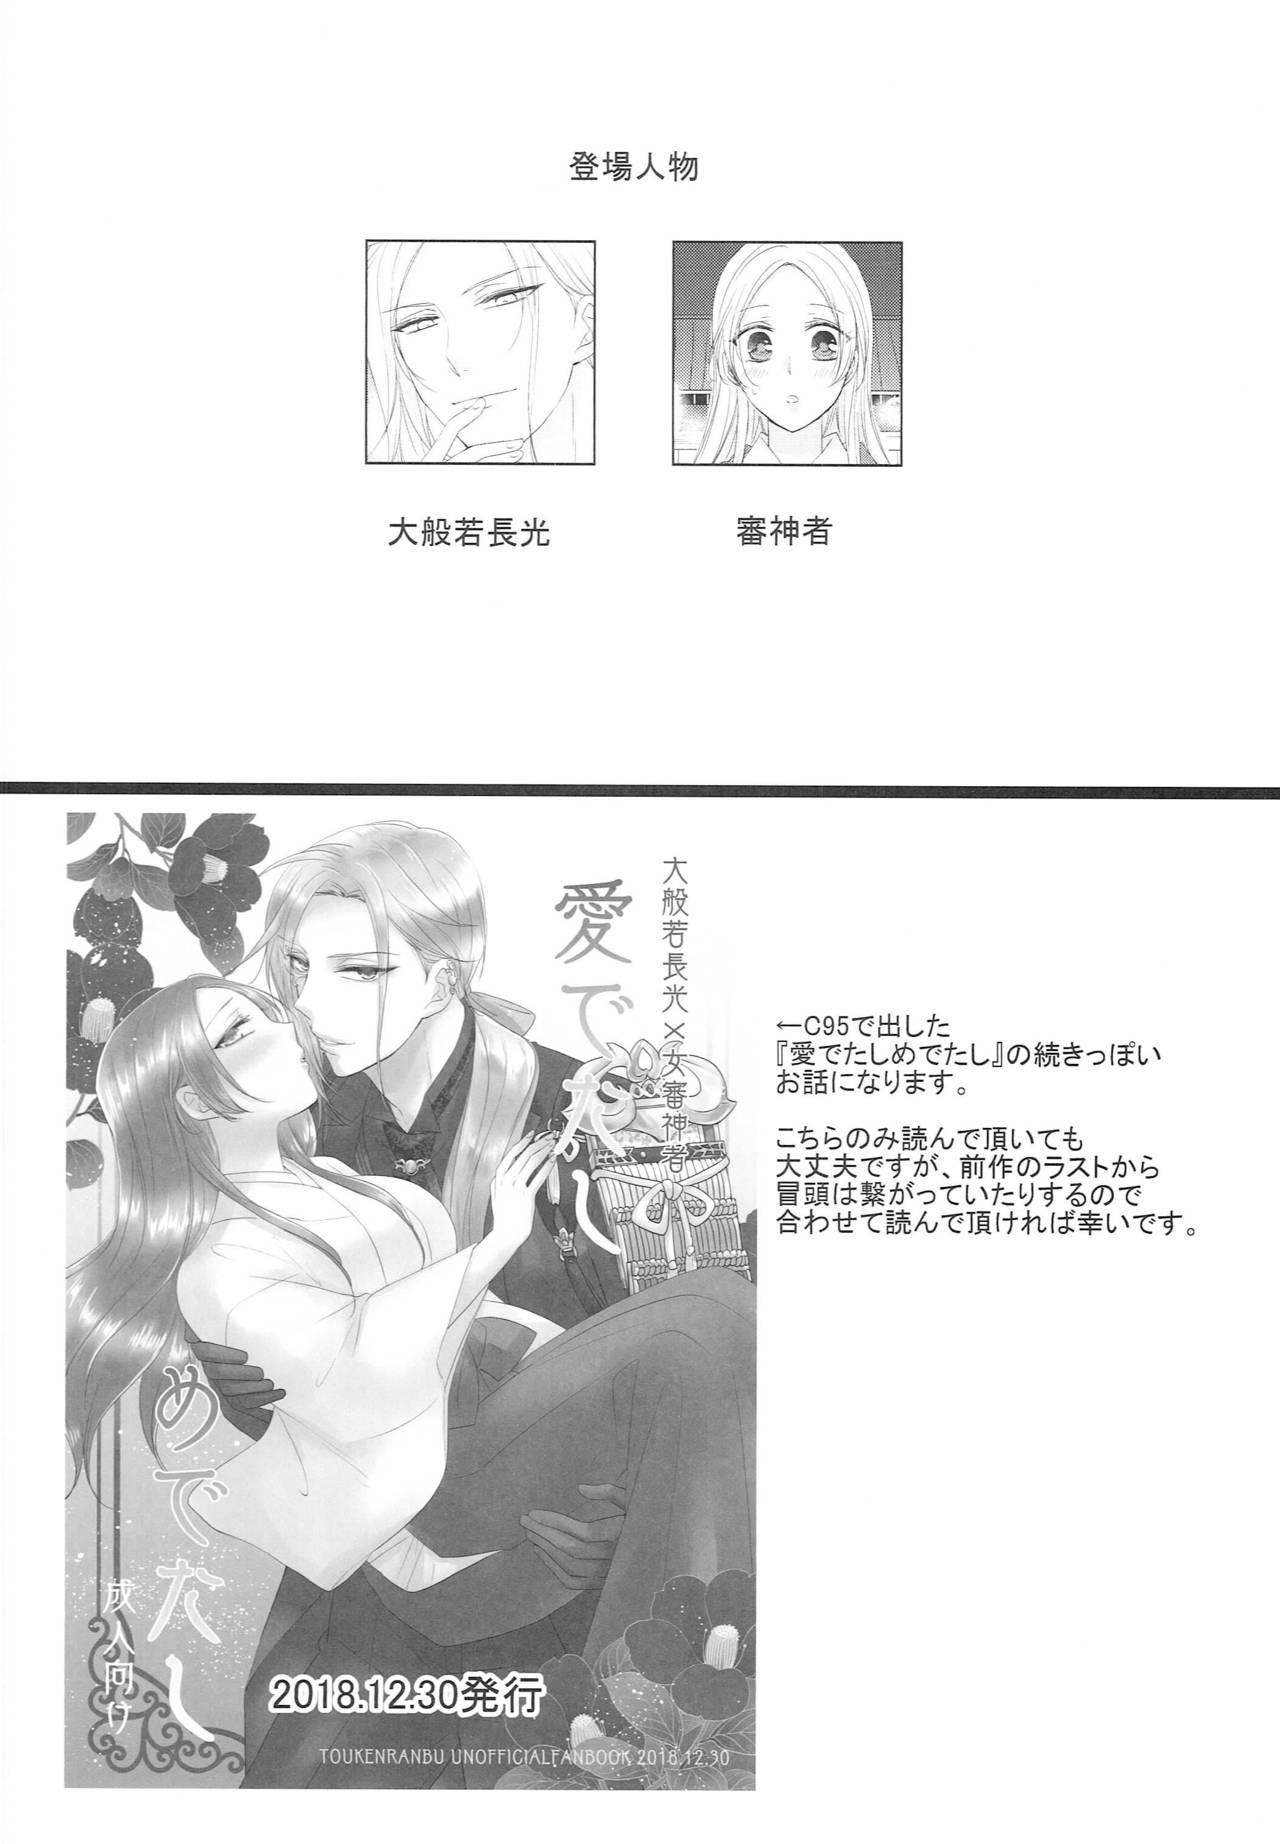 Jacking Hana o Mederu - Touken ranbu Anime - Page 3